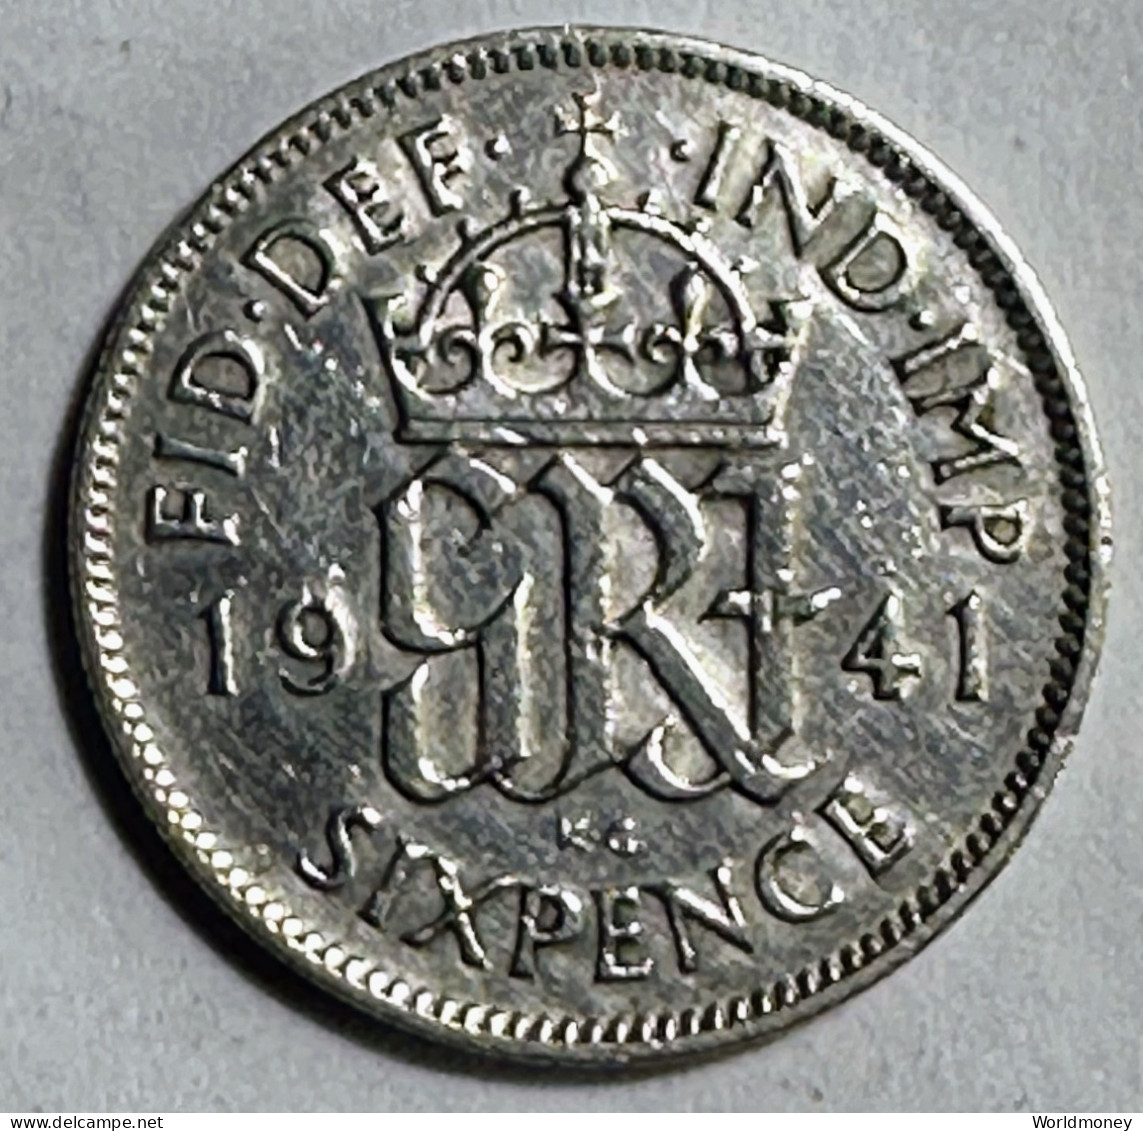 United Kingdom 6 Pence 1941 (Silver) - H. 6 Pence